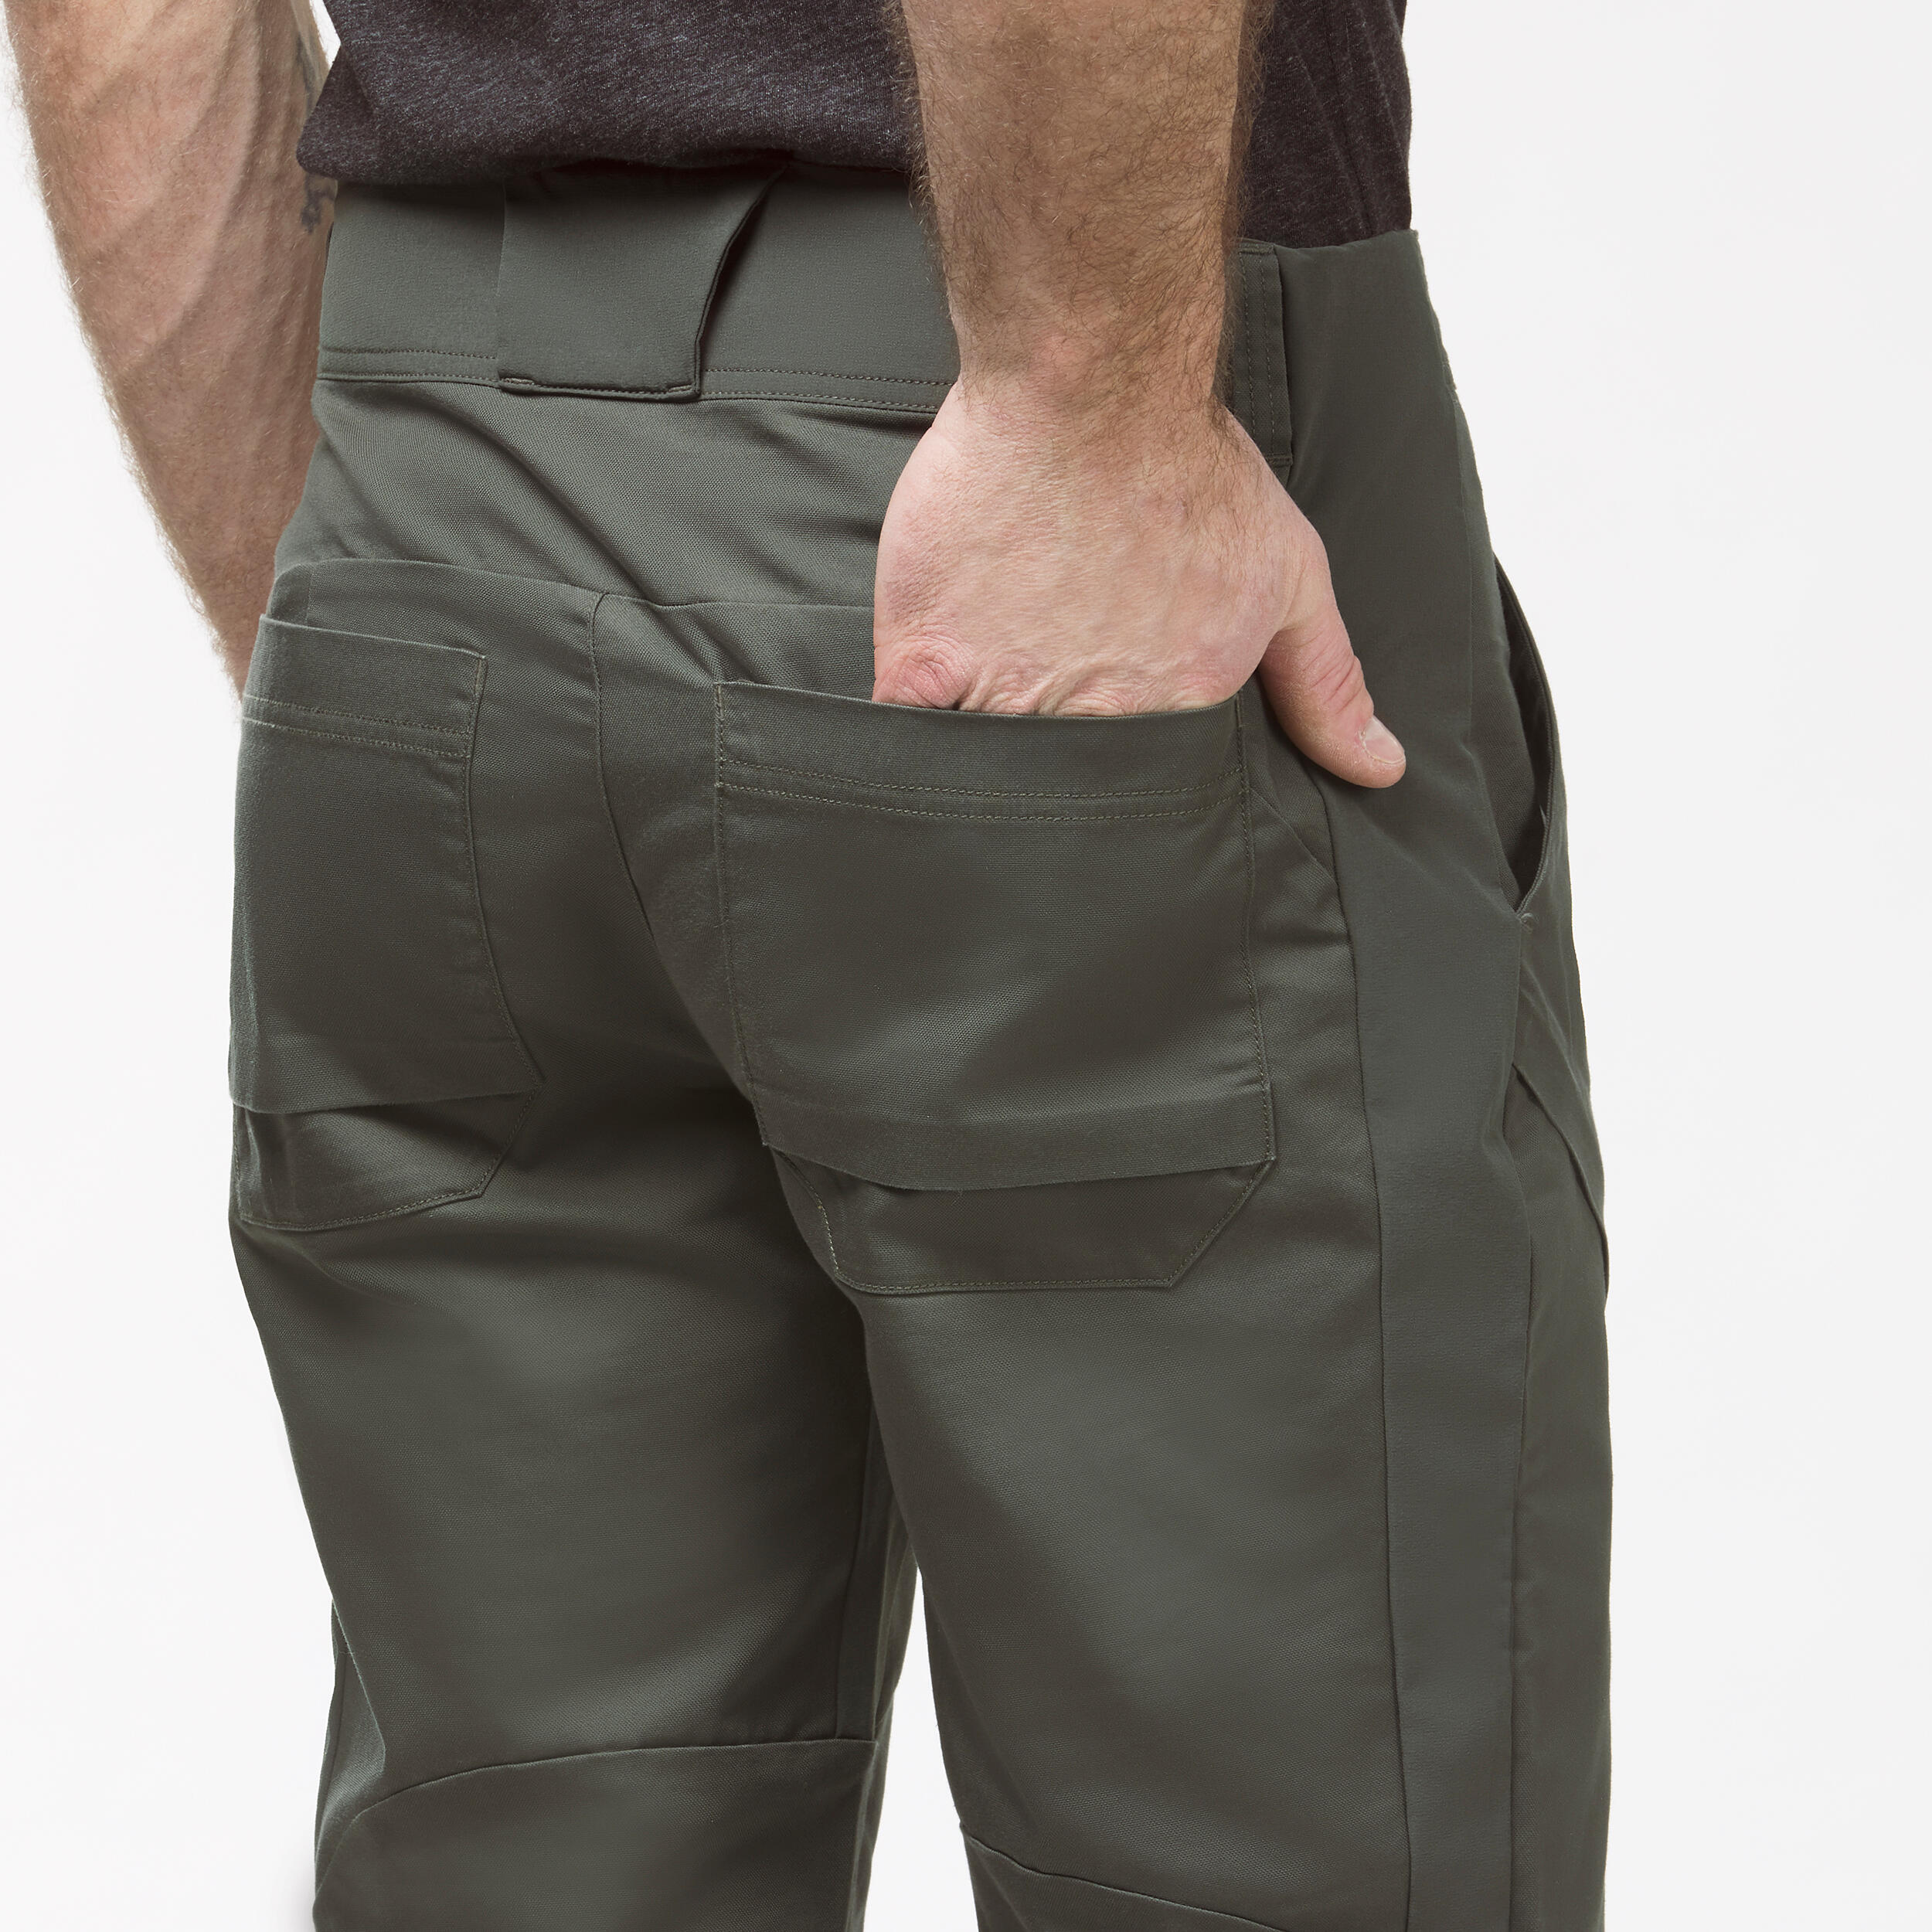 Buy khaki Trousers & Pants for Men by NETPLAY Online | Ajio.com